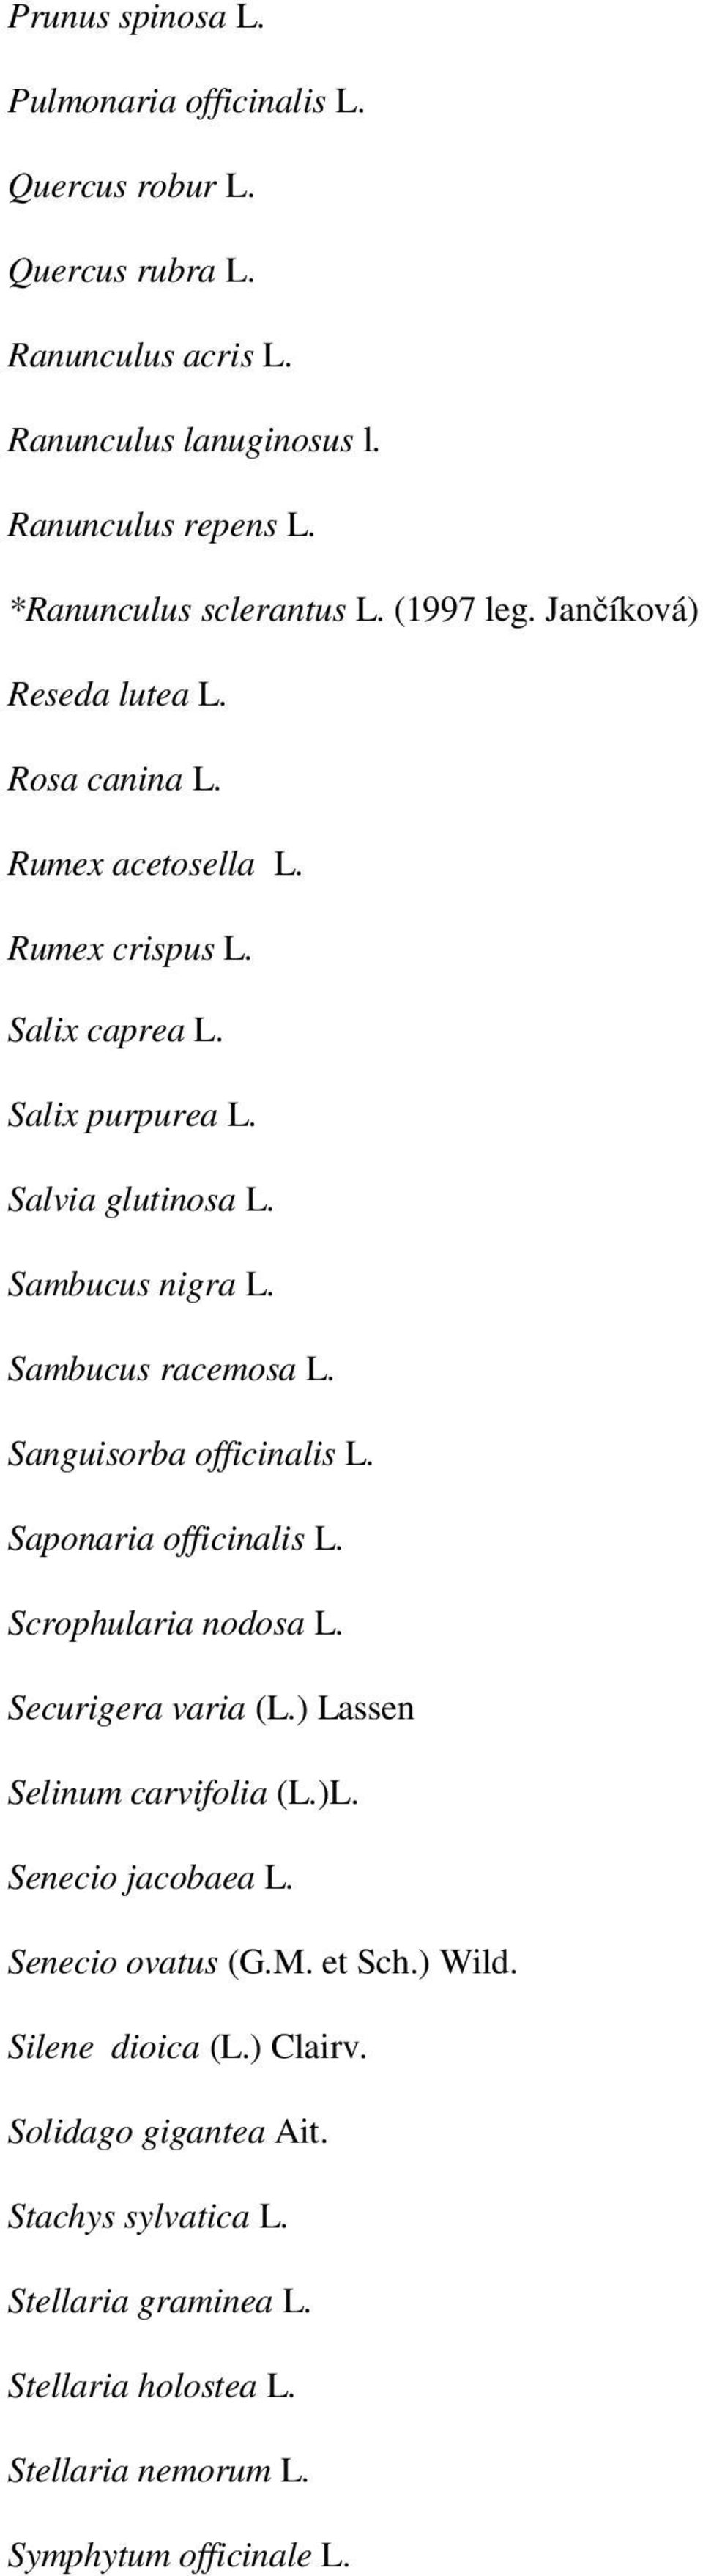 Sambucus racemosa L. Sanguisorba officinalis L. Saponaria officinalis L. Scrophularia nodosa L. Securigera varia (L.) Lassen Selinum carvifolia (L.)L. Senecio jacobaea L.